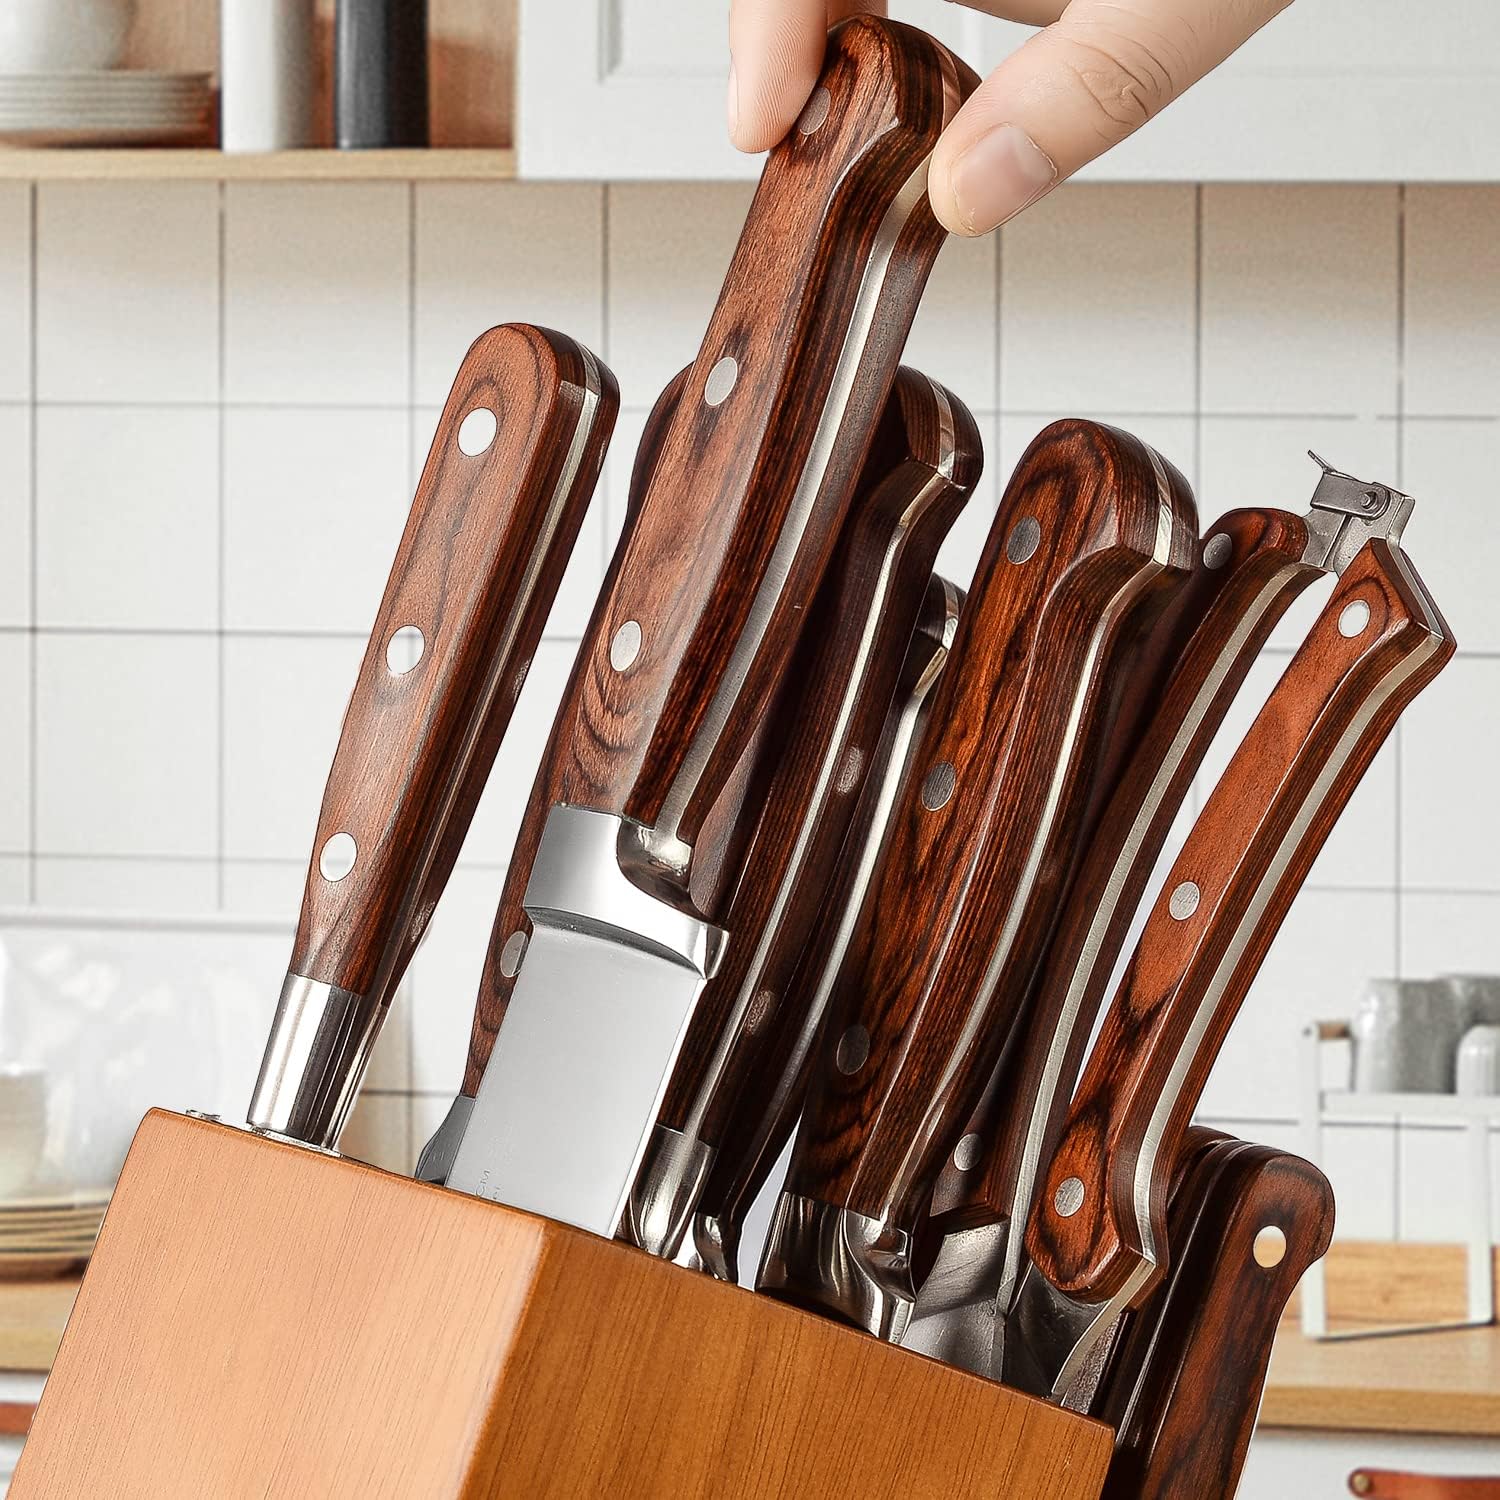 KD Household Multifunctional Kitchen Knives, Kitchen Knives Set